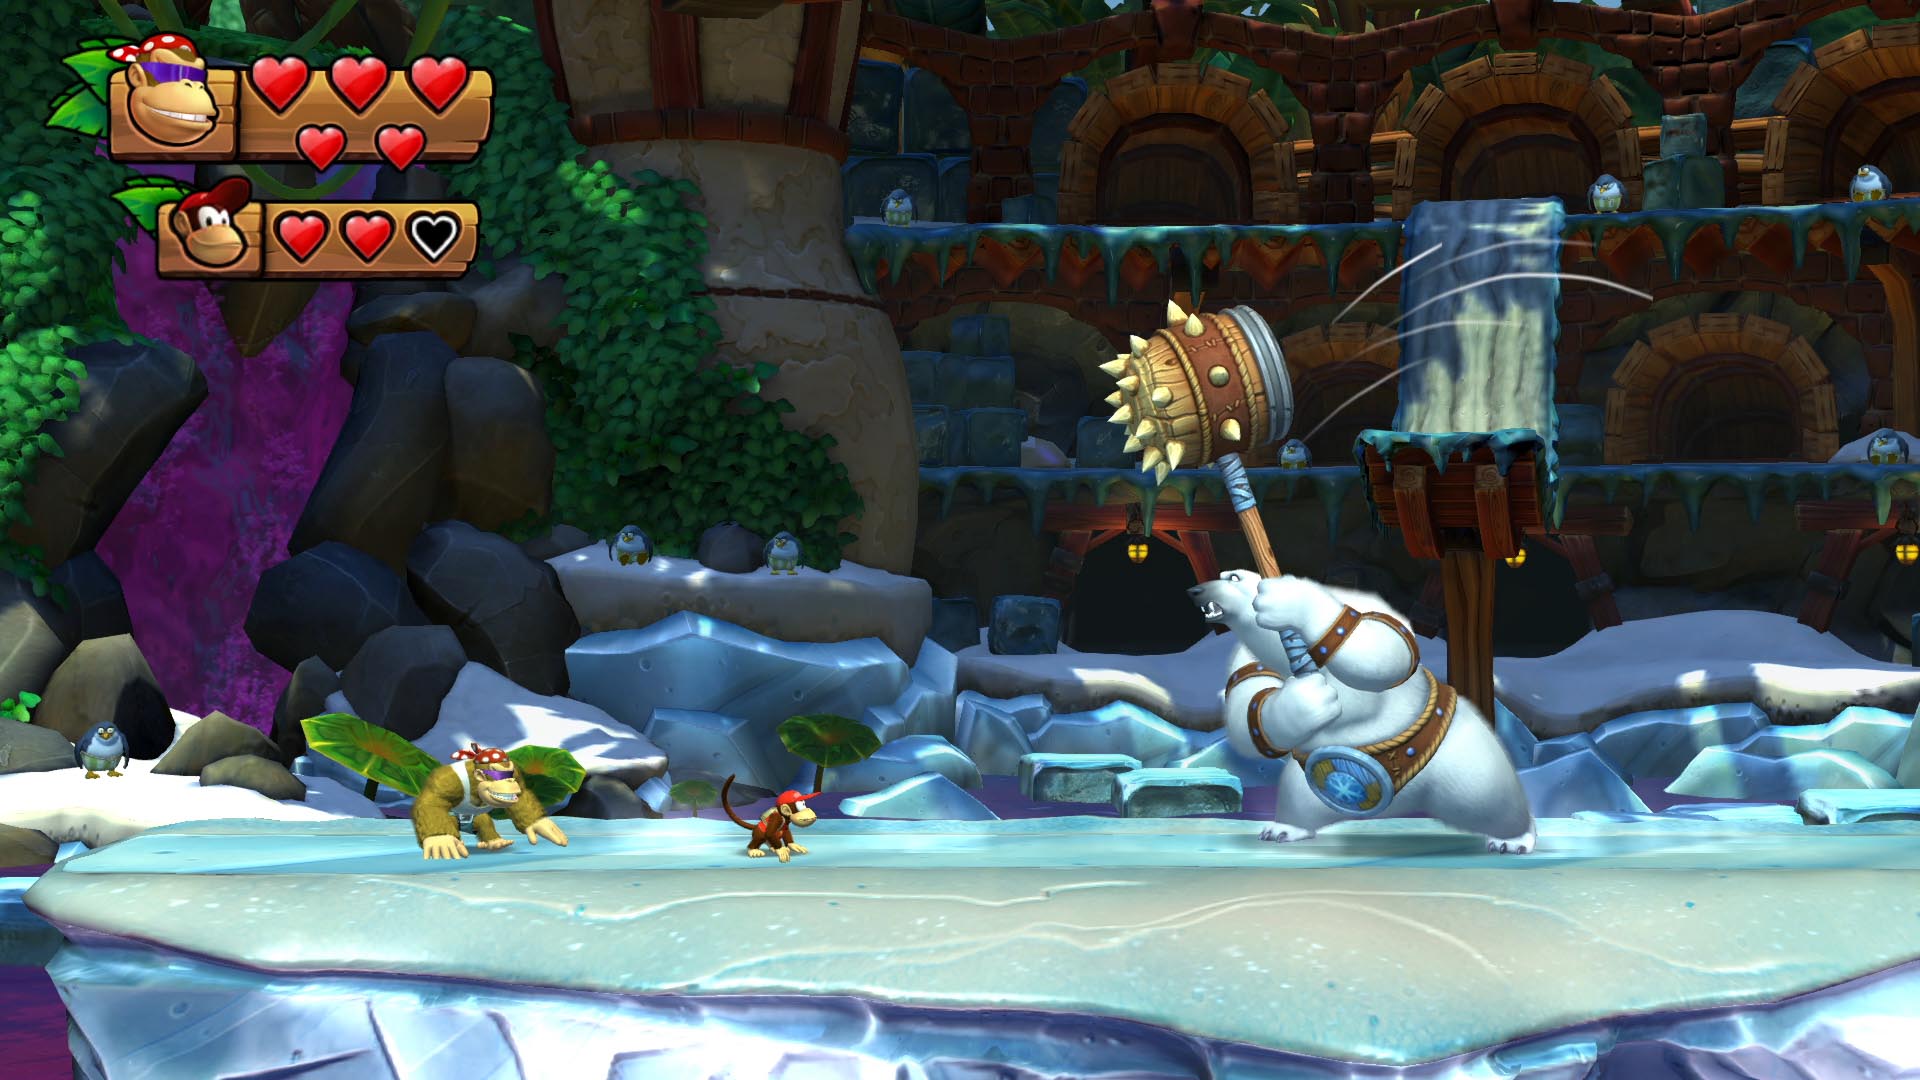 Screenshot: game-images/Donkey_Kong_Country_Tropical_Freeze_screenshots_210413.jpg